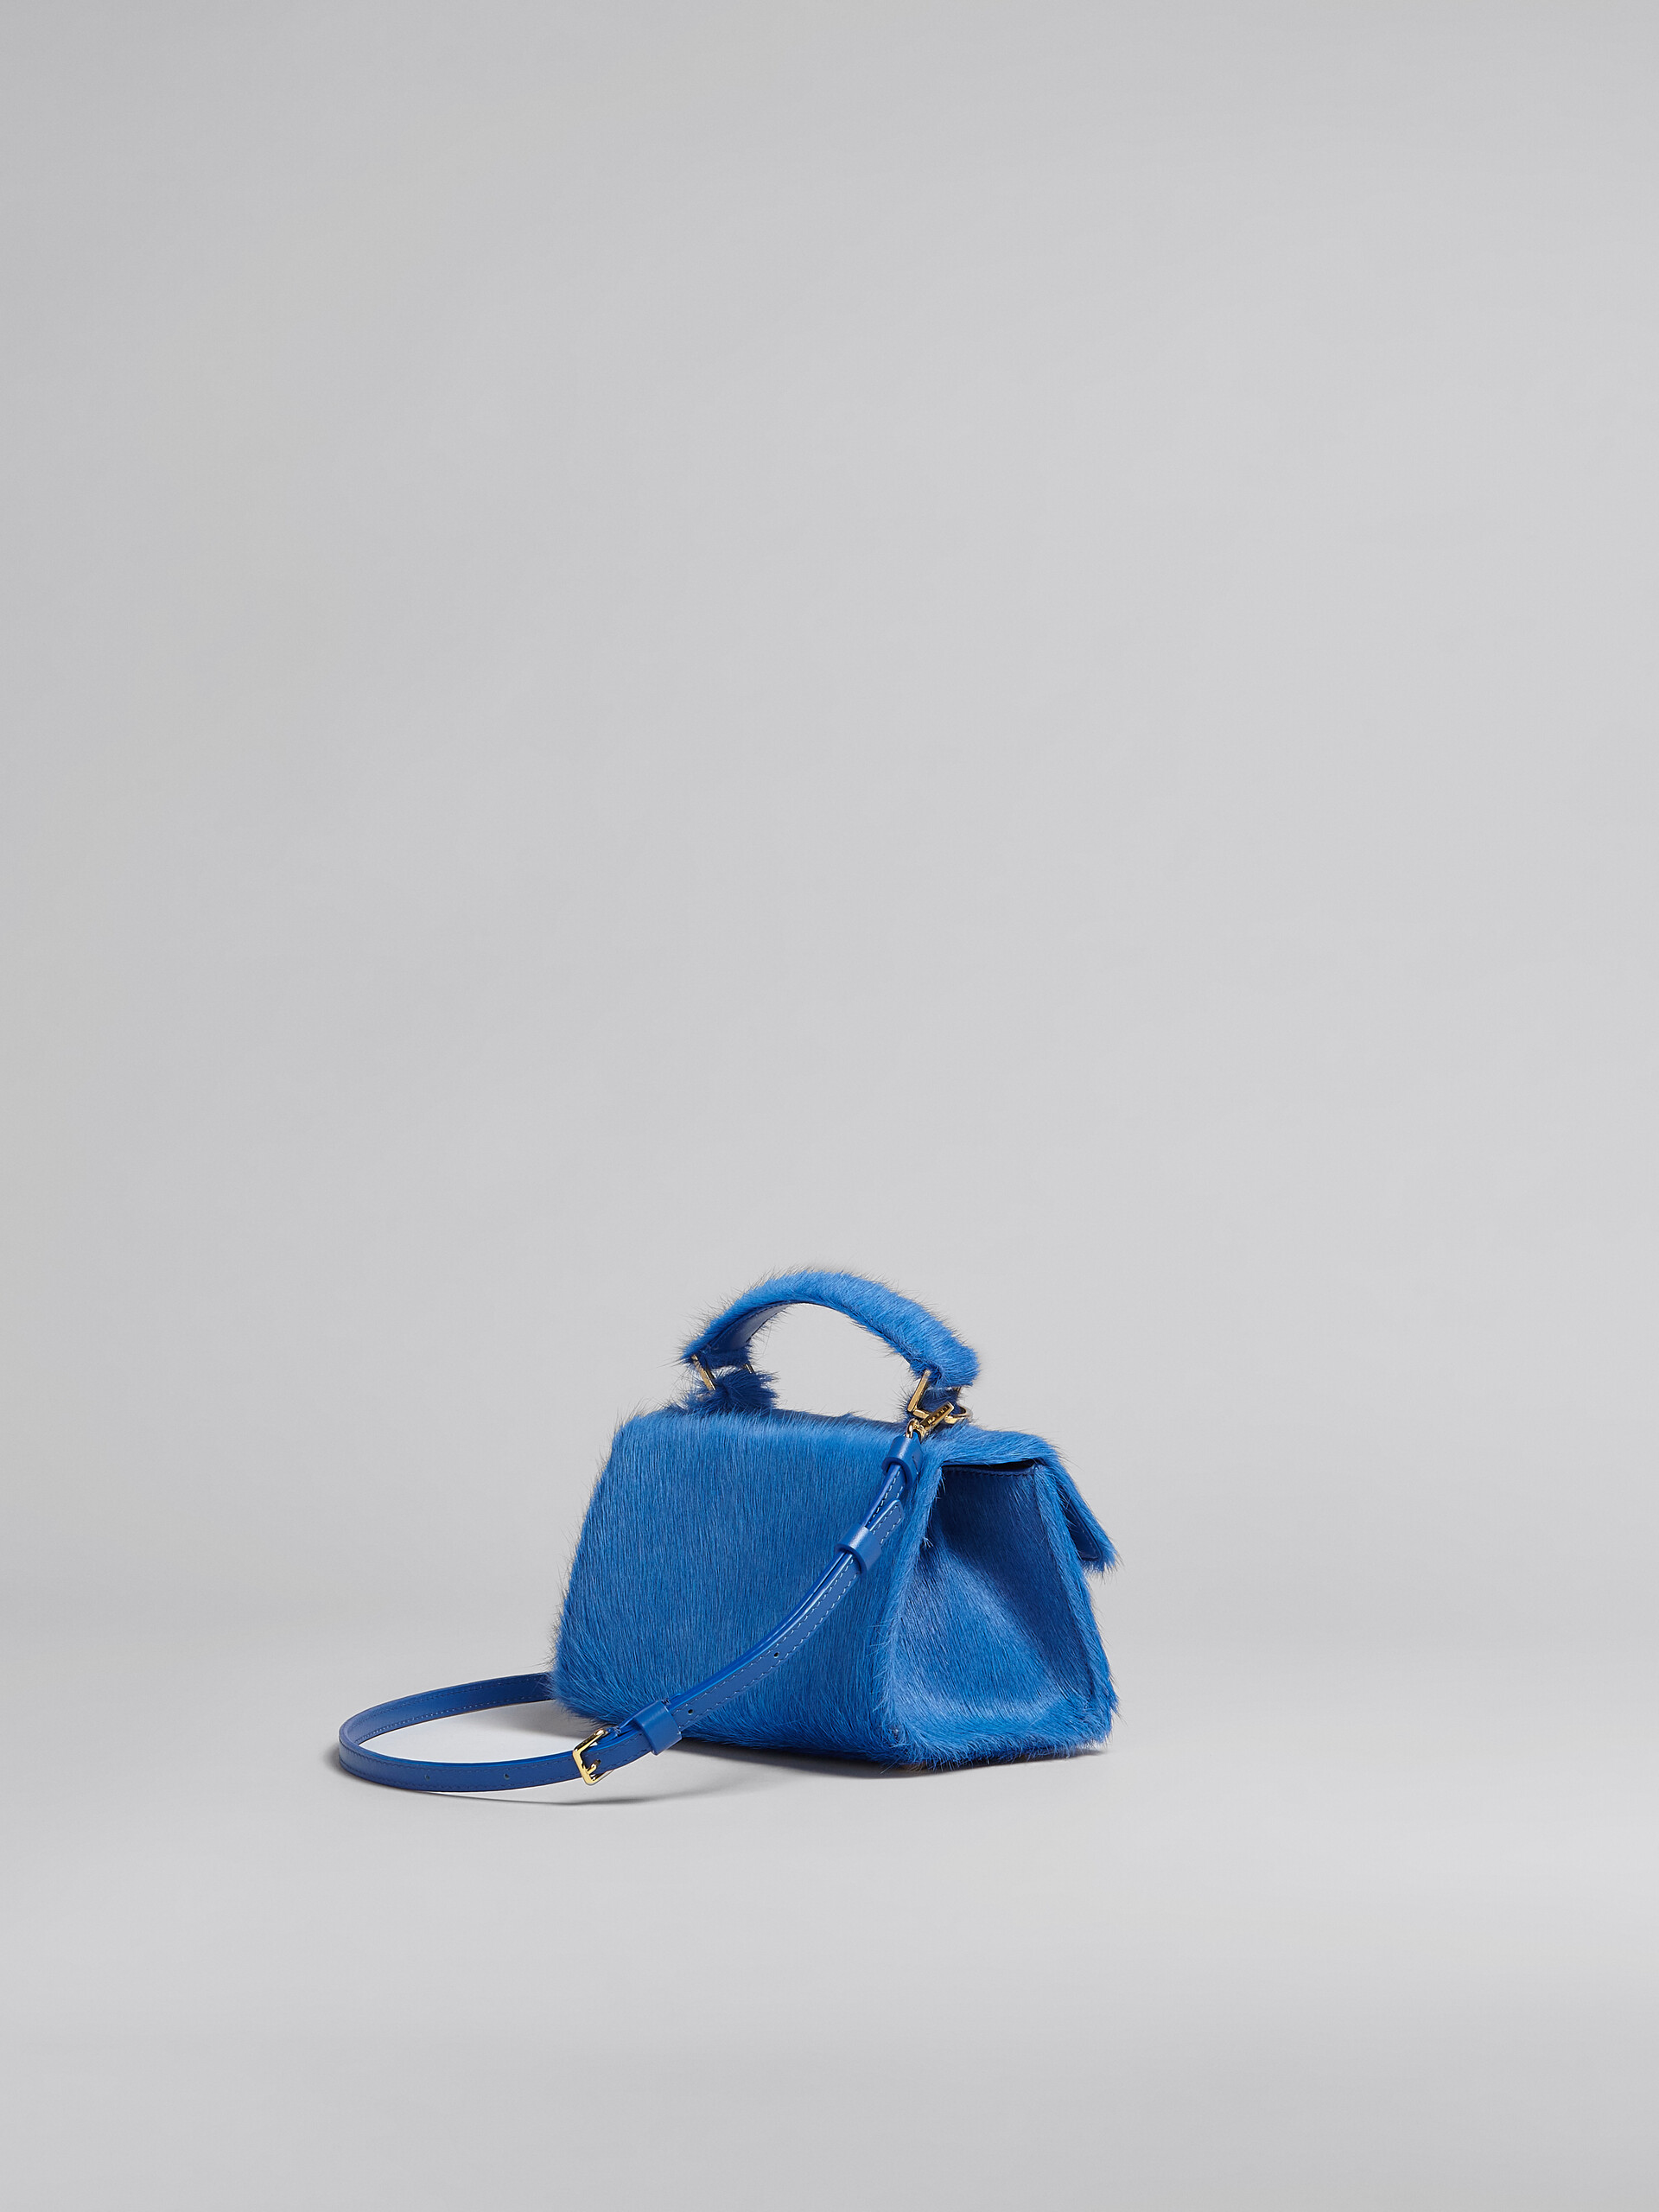 Relativity Mini Bag in blue long hair calfskin - Handbags - Image 3